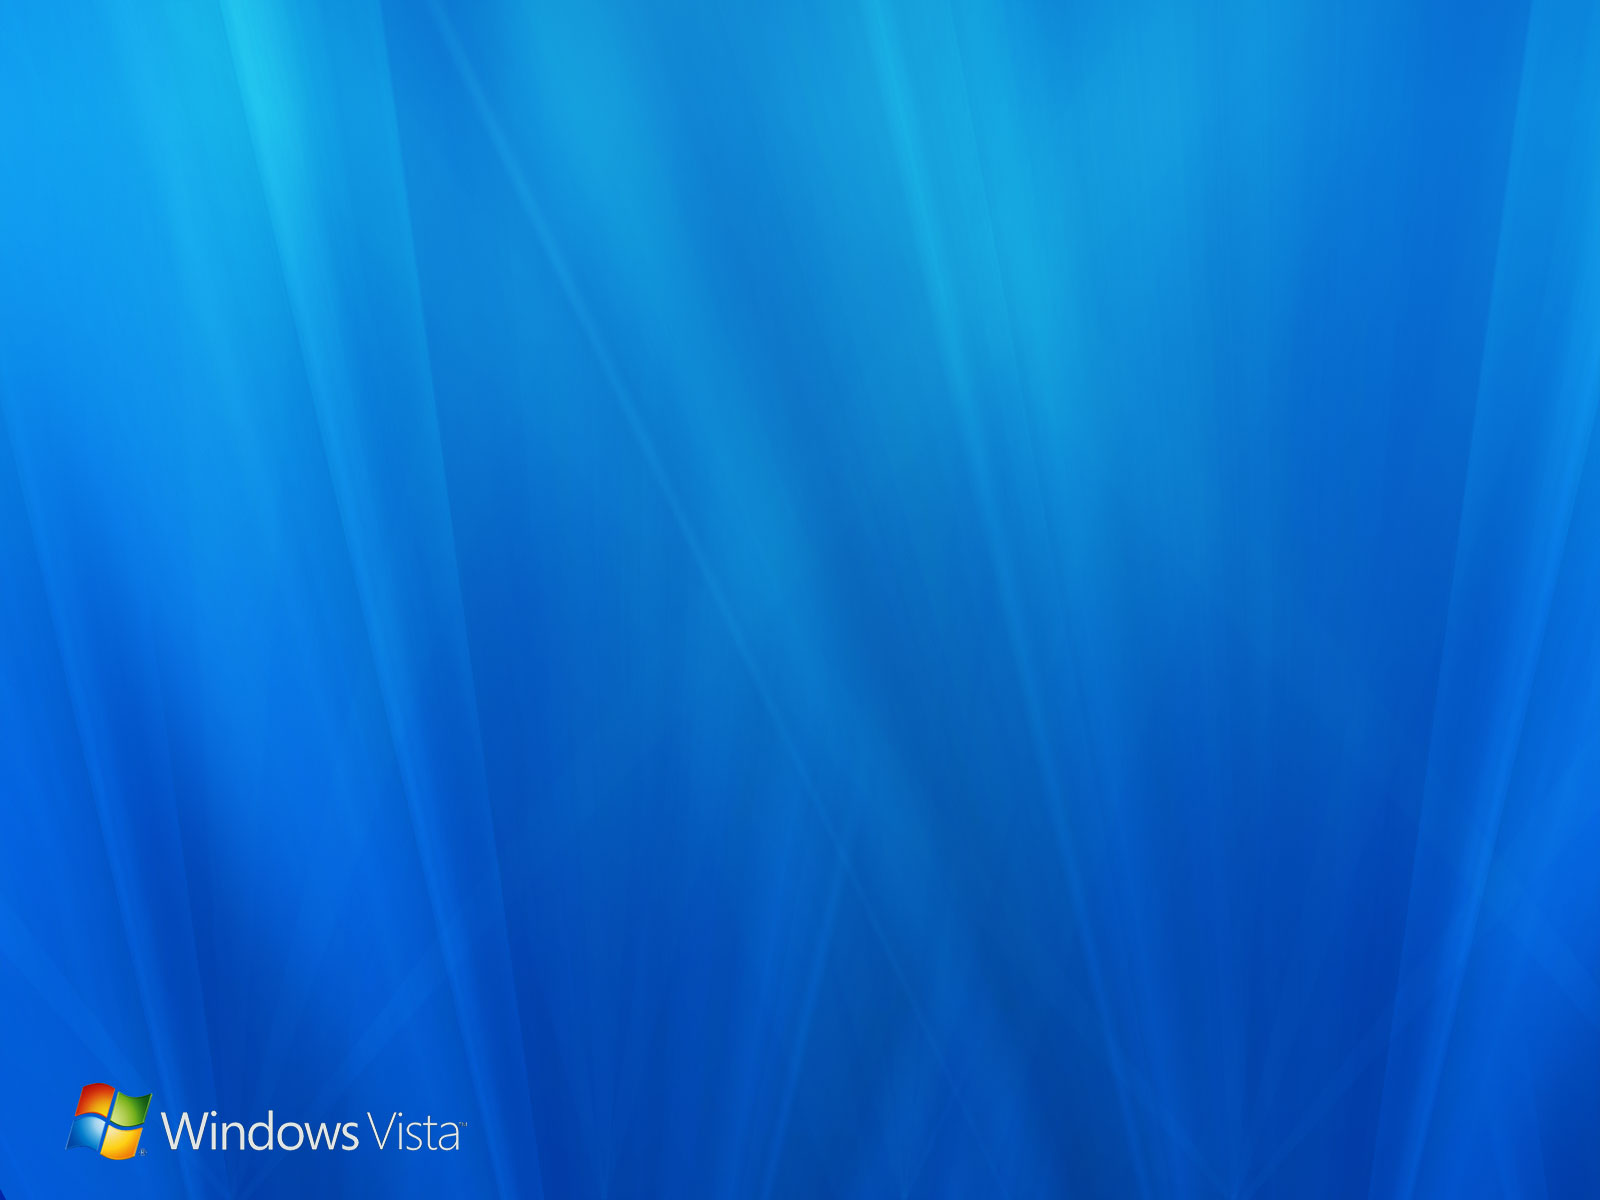 Free Download Windows Vista All Blue Wallpaper Geekpedia 1600x1200